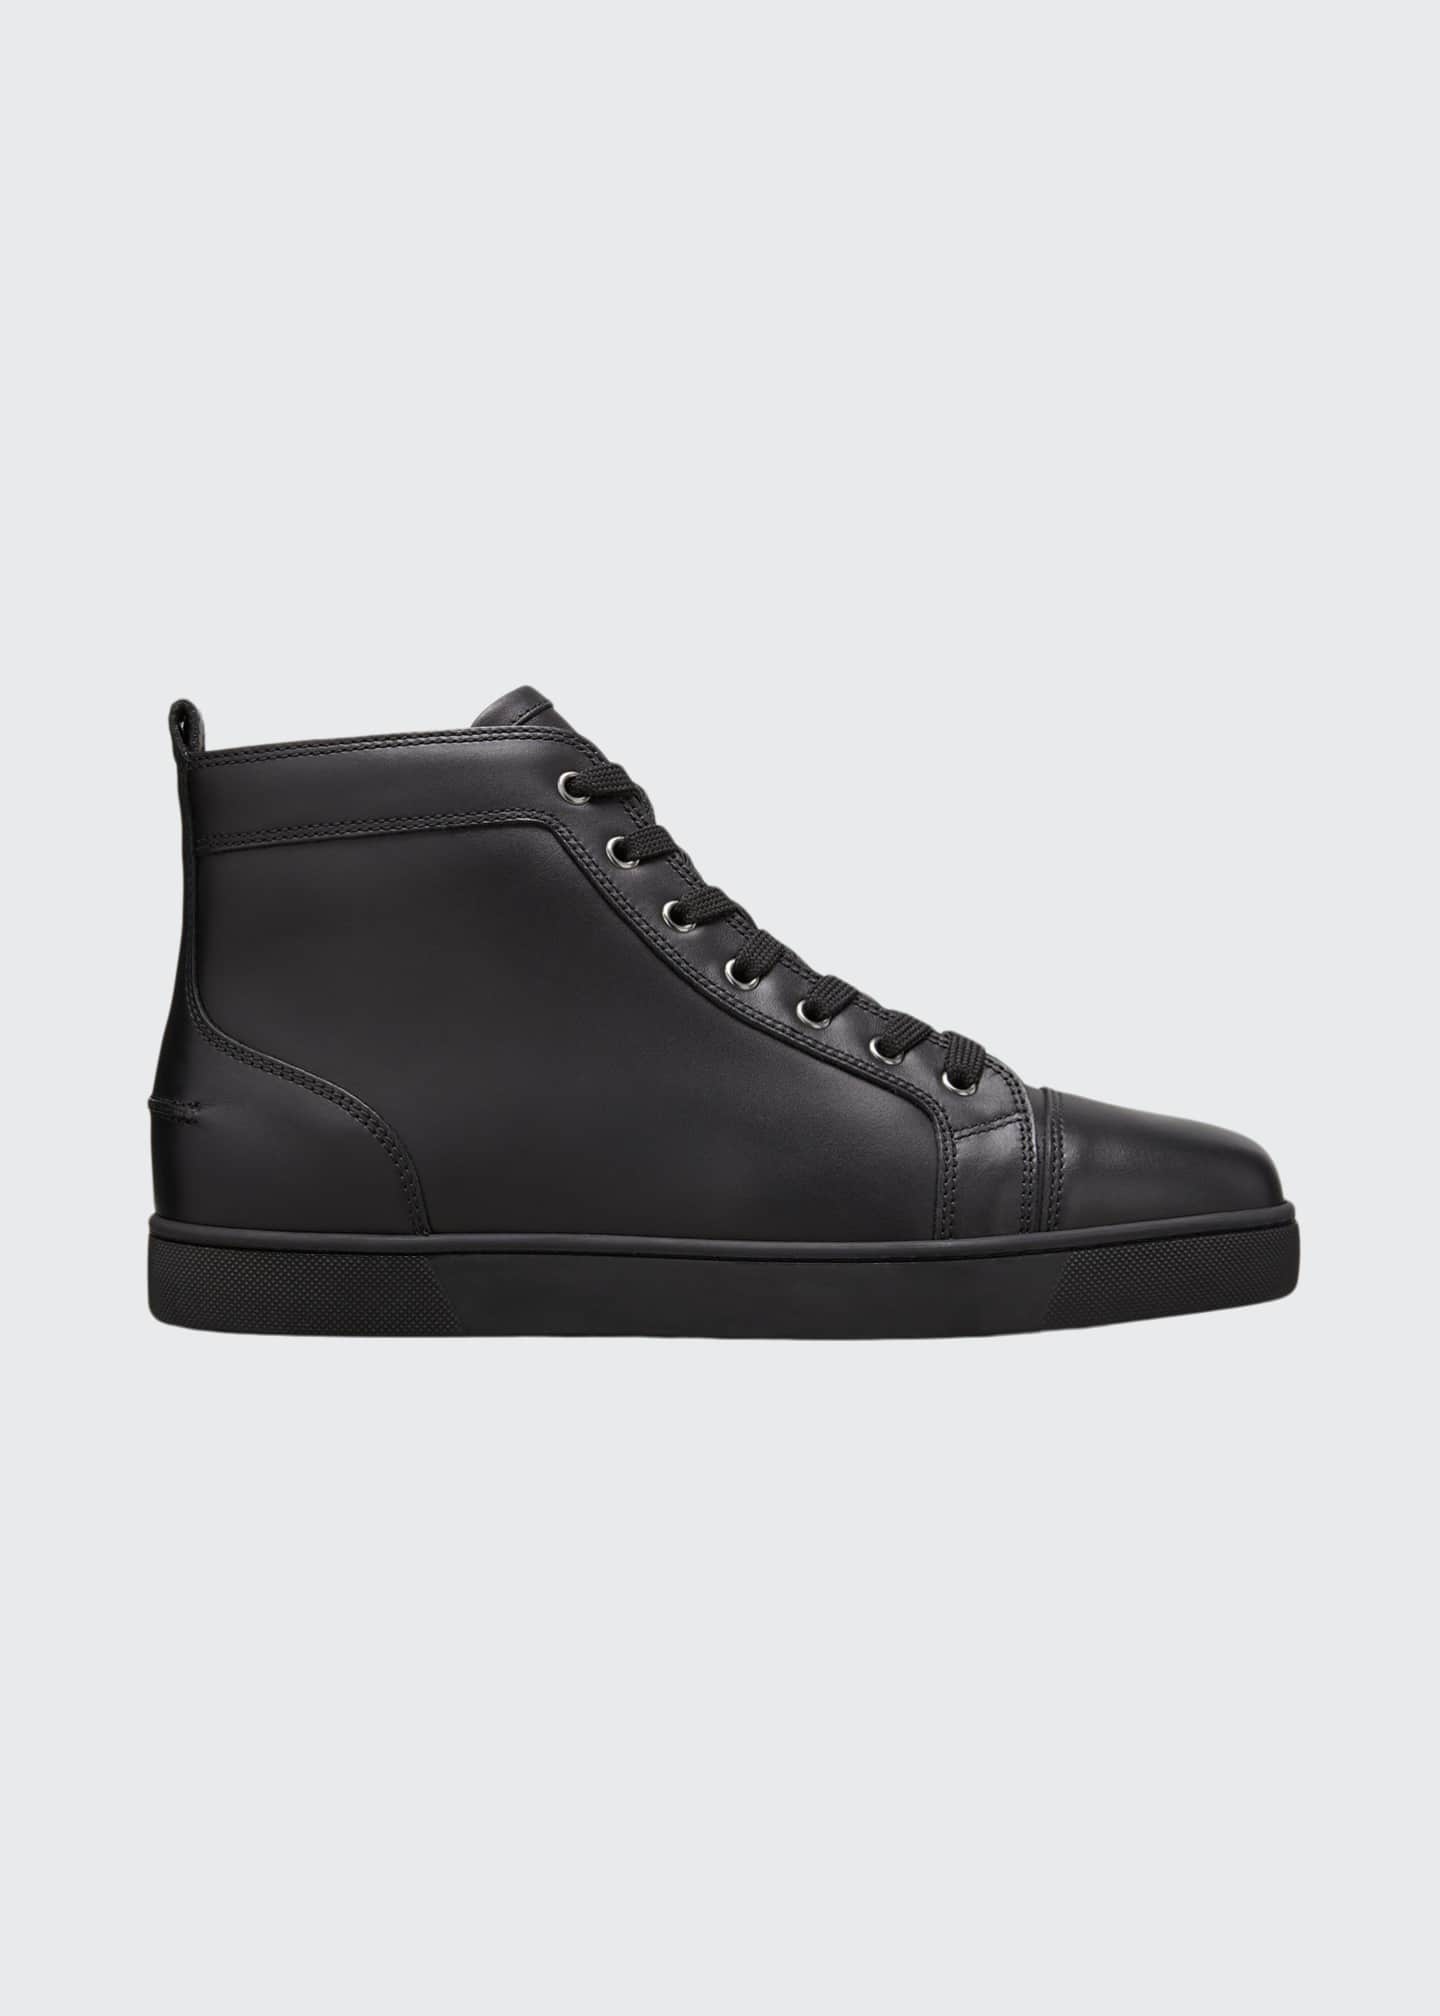 louboutin black leather sneakers